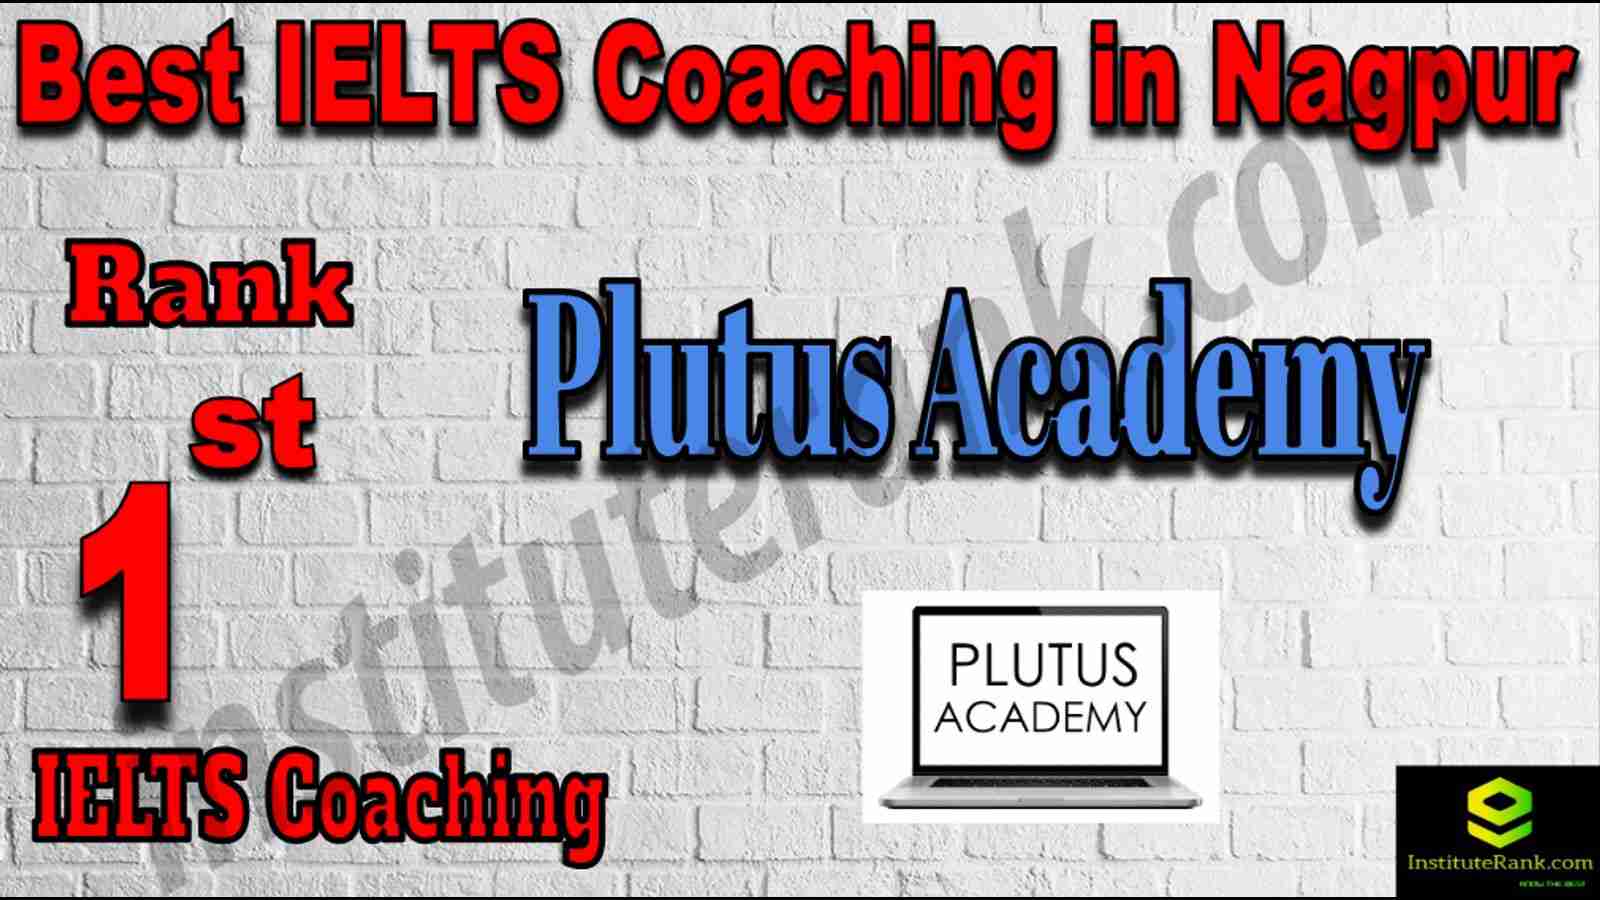 1st Best IELTS Coaching in Nagpur